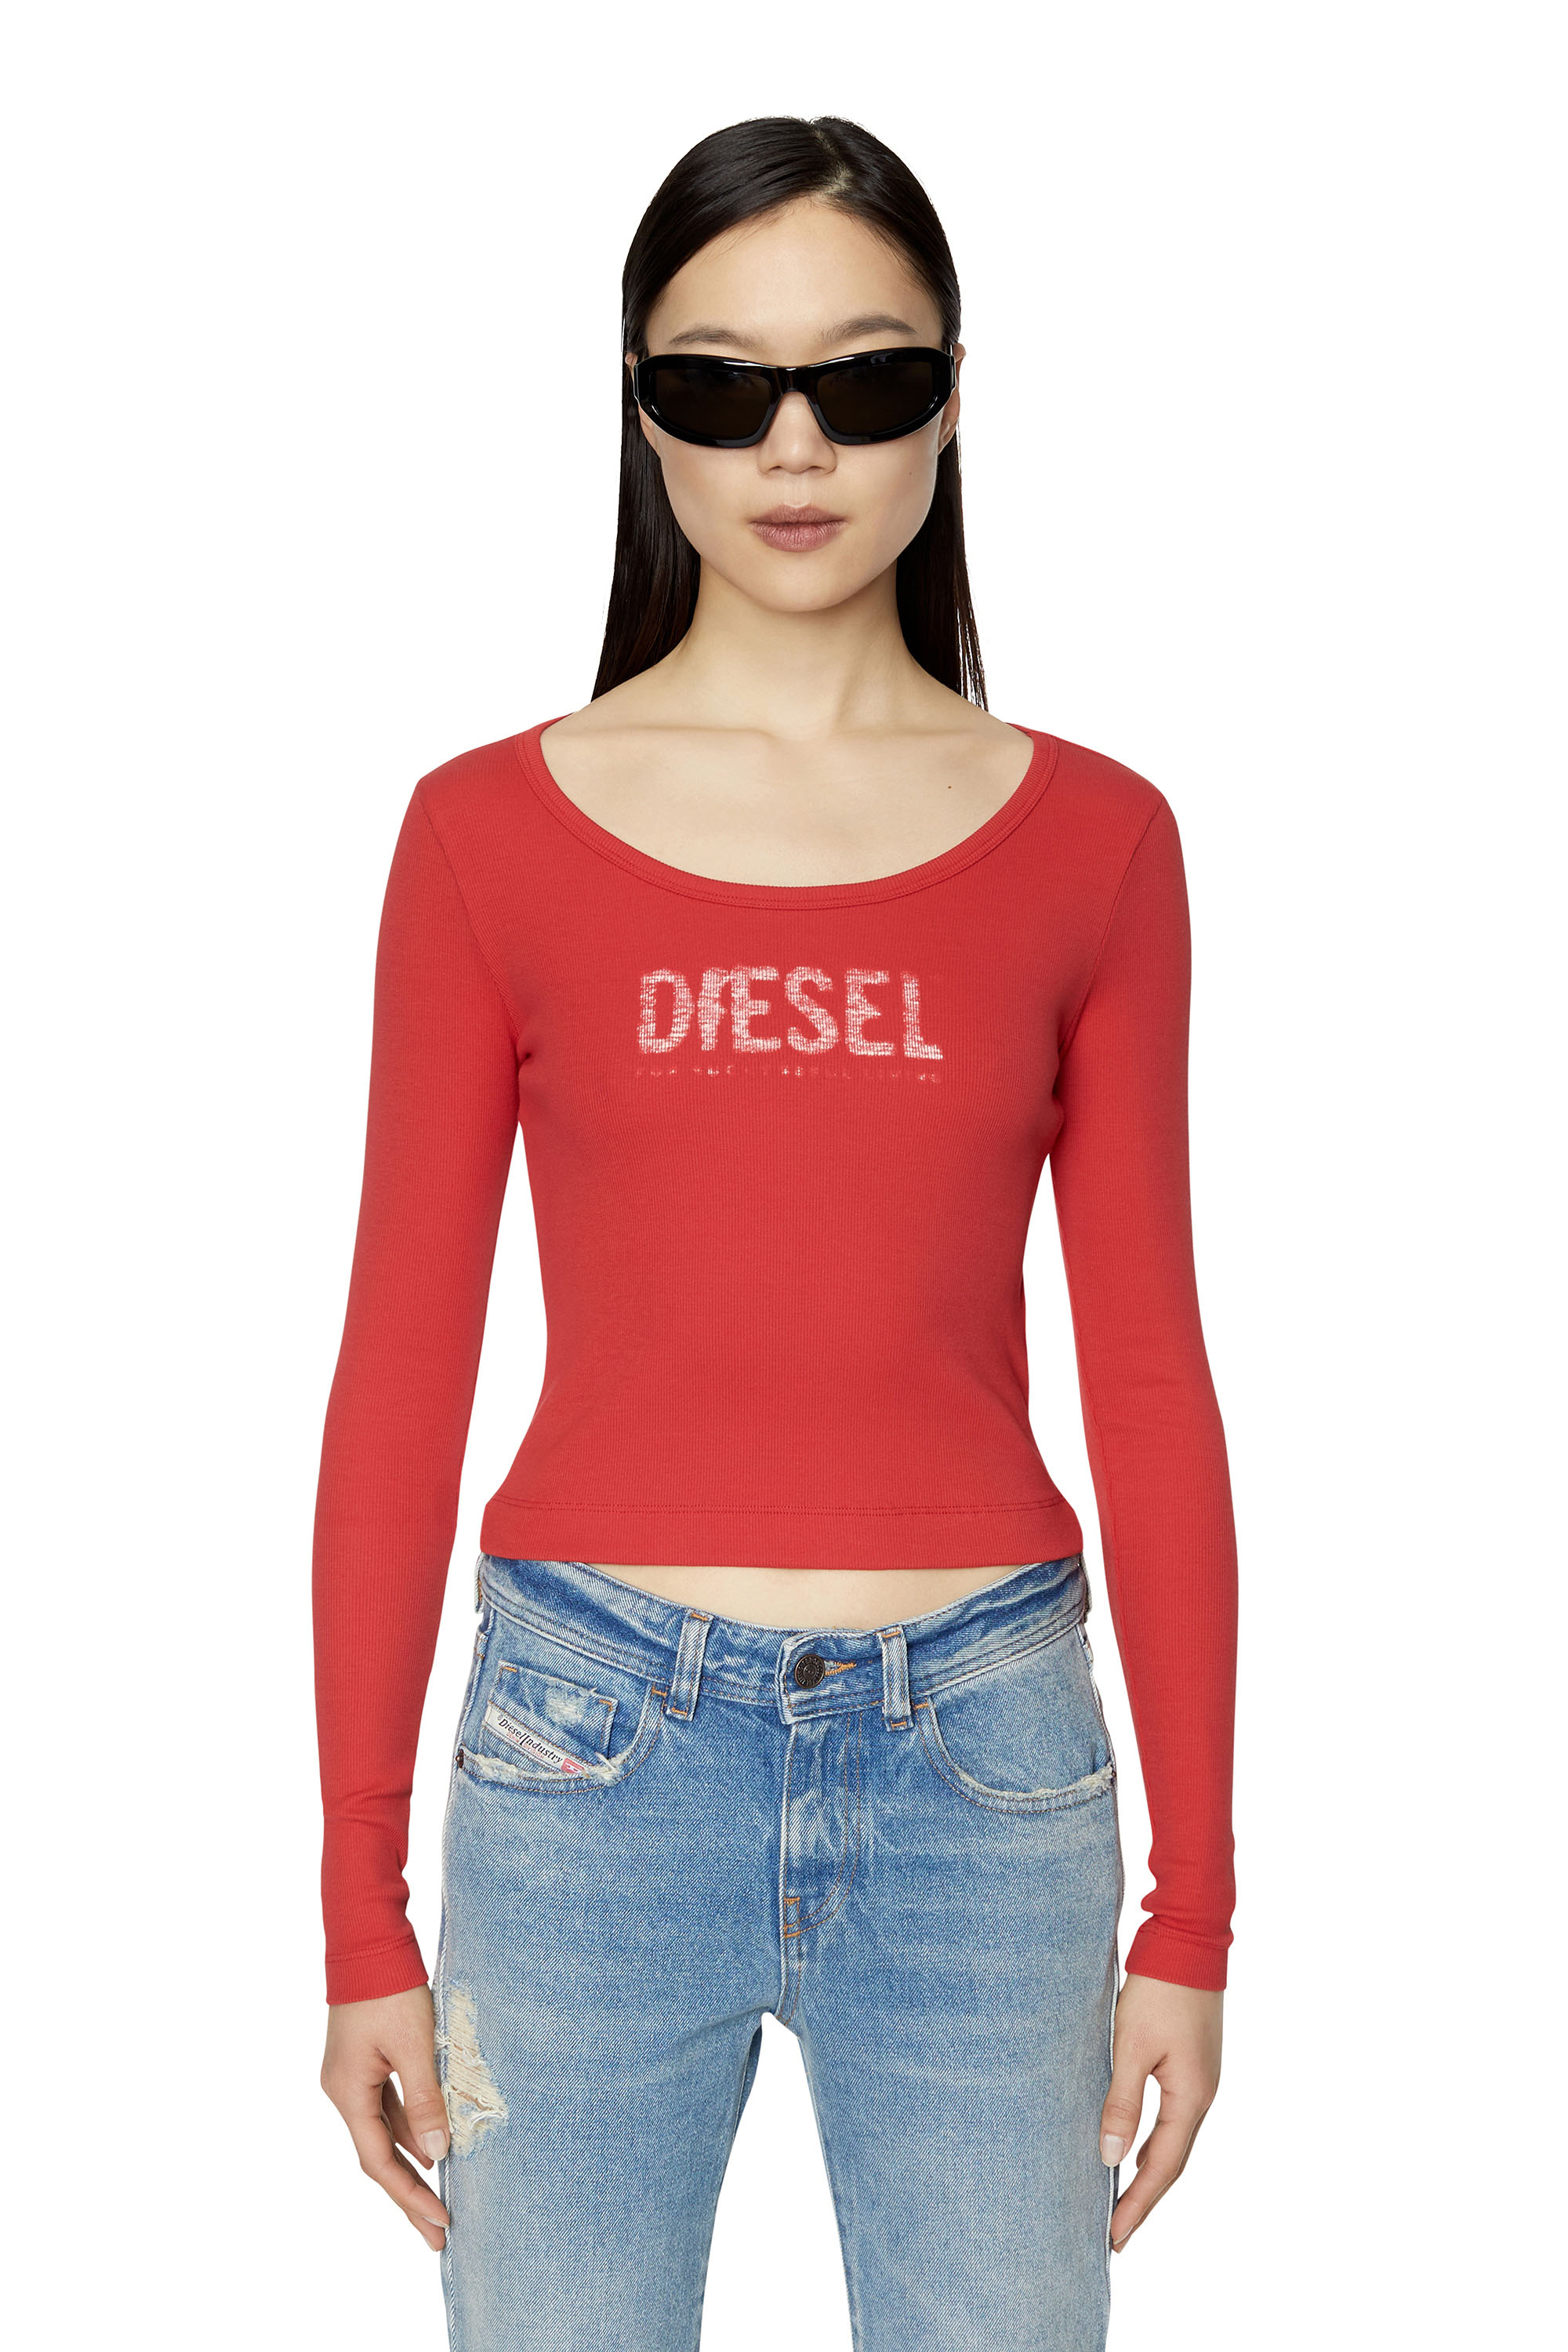 Diesel - T-BALLET-E1, Rojo - Image 3